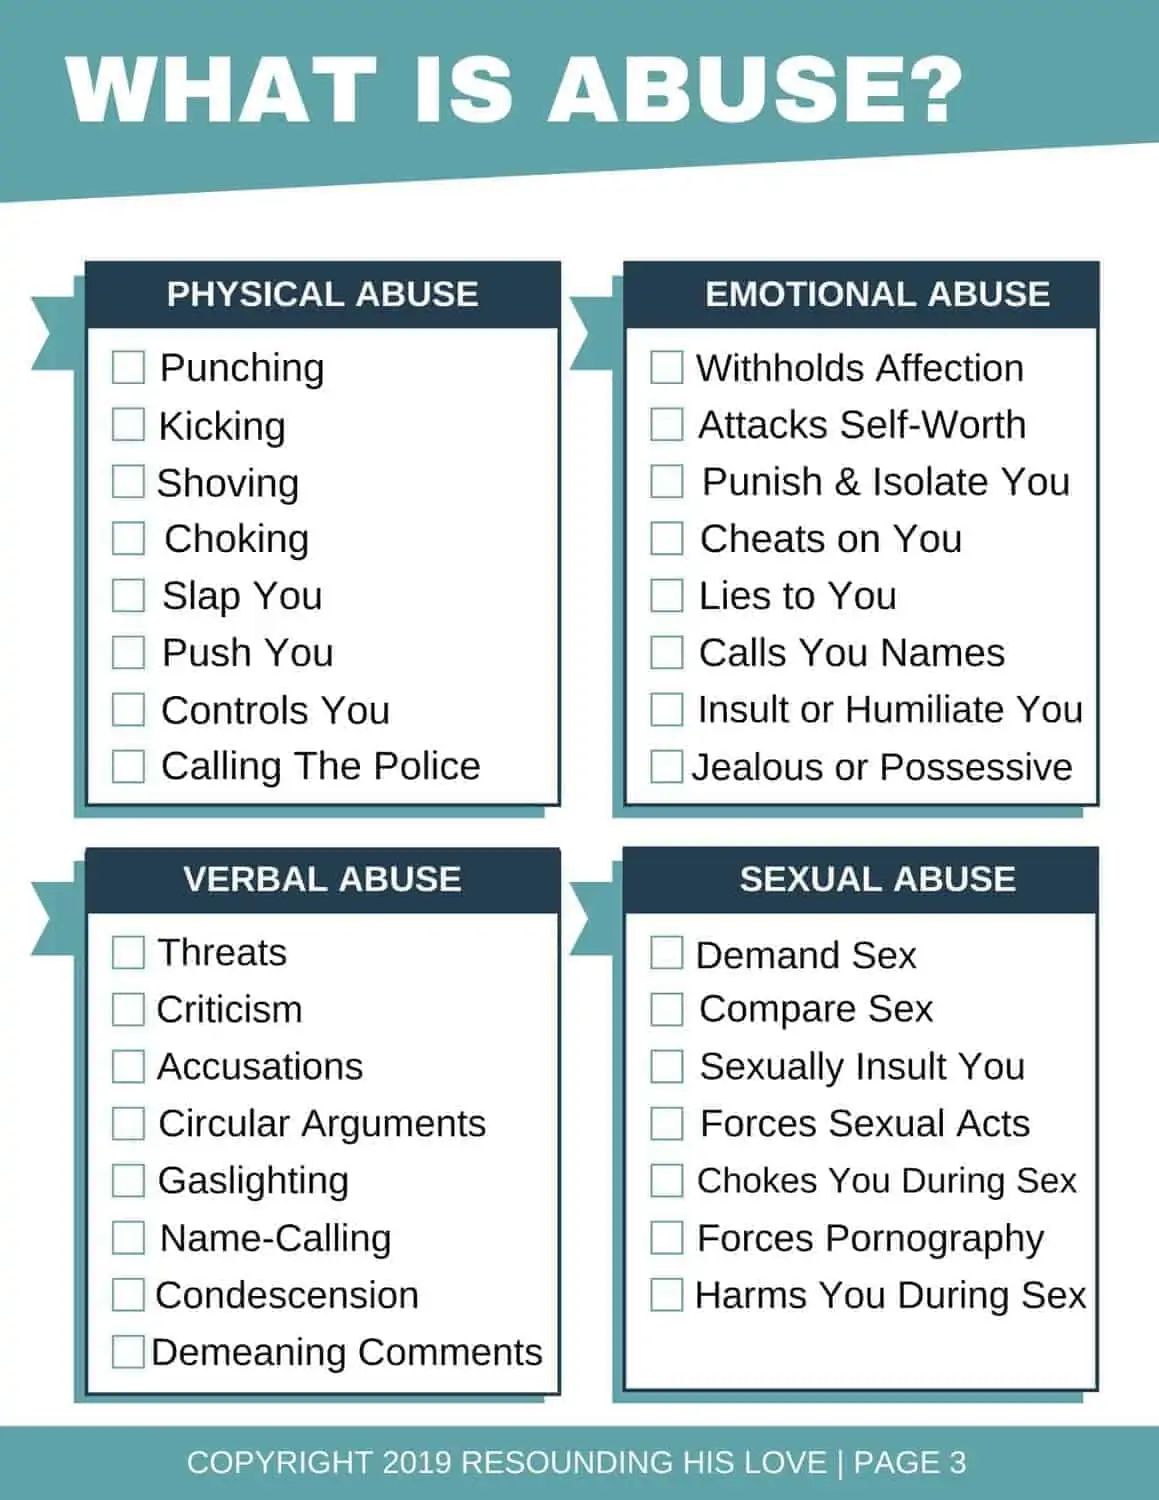 Abuse Checklist